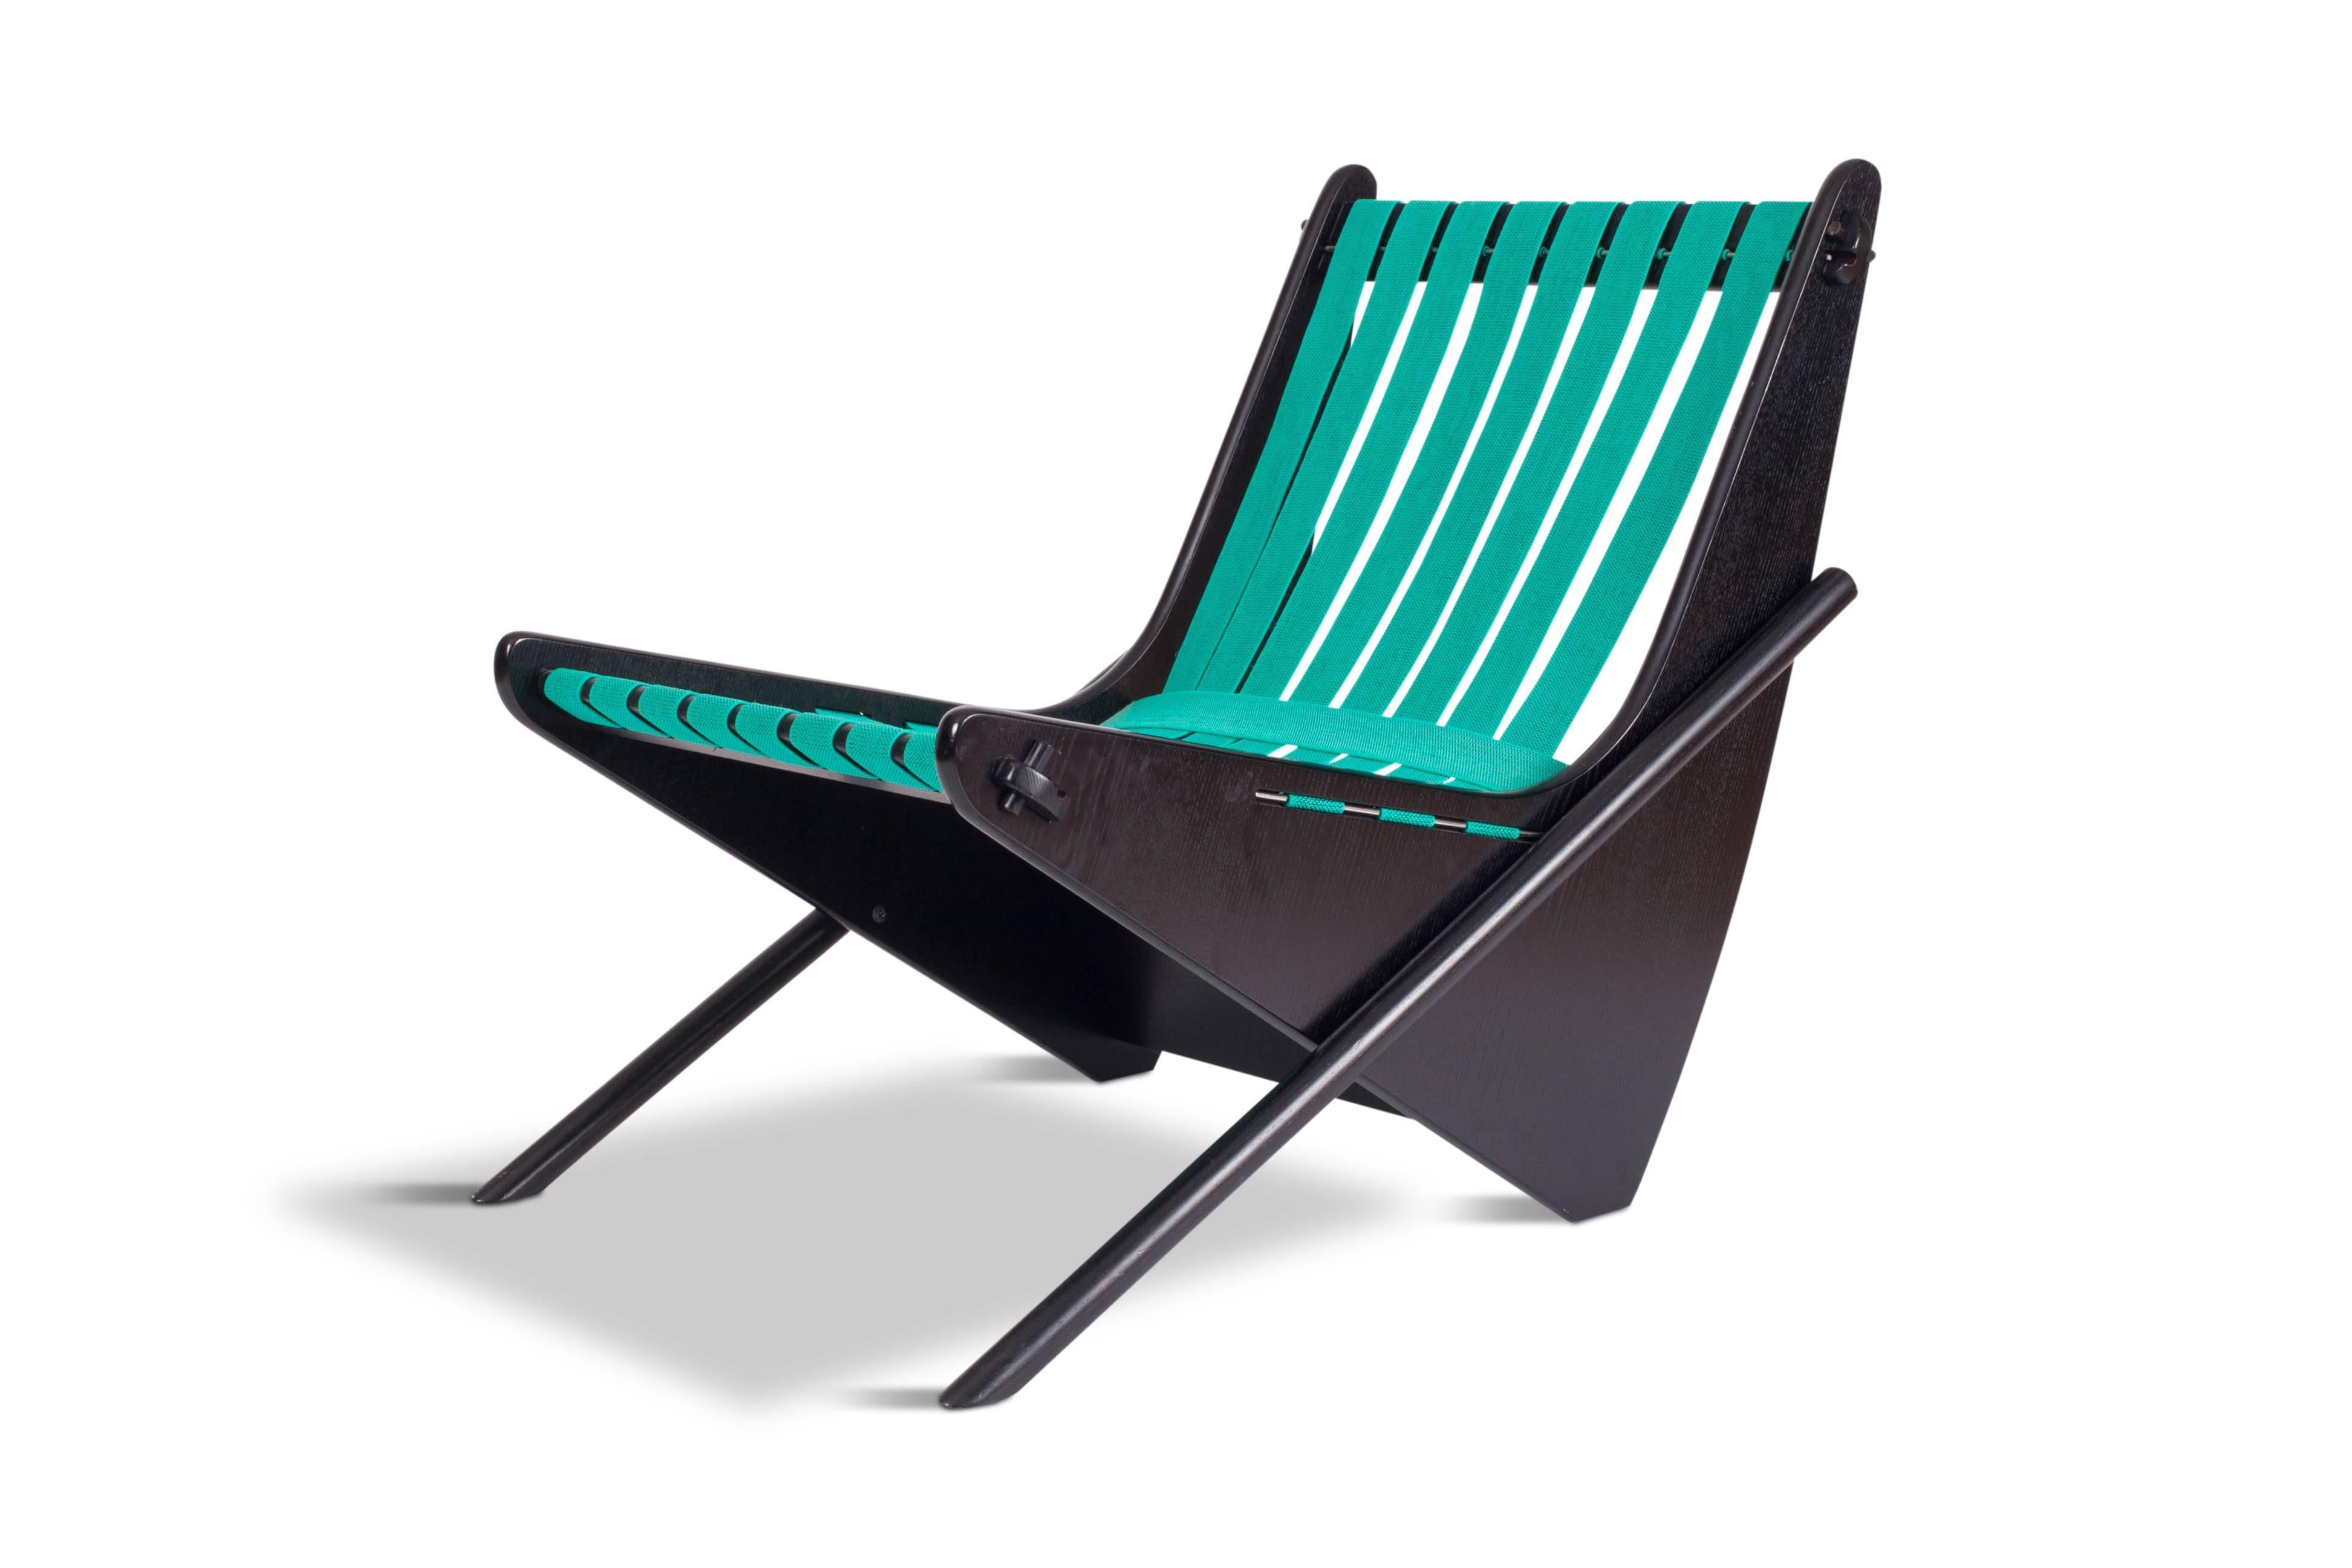 Mid-20th Century Brazilian design  “Boomerang” Lounge Chair by Richard Neutra